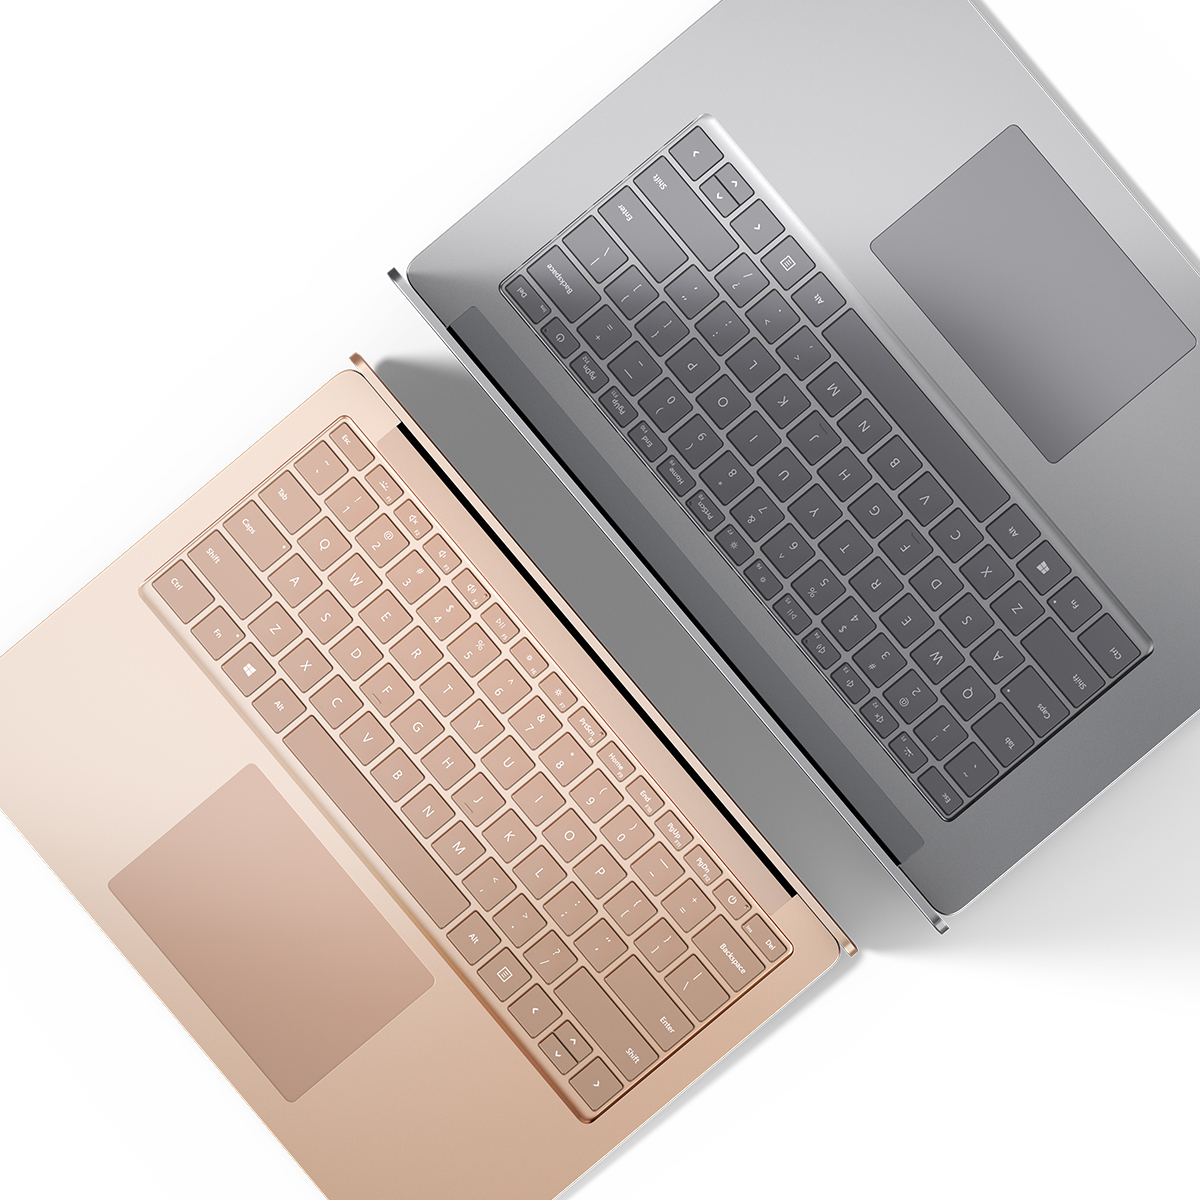 Microsoft Surface Laptop 4 13 inch - i5/8GB/512GB - Sandstone 